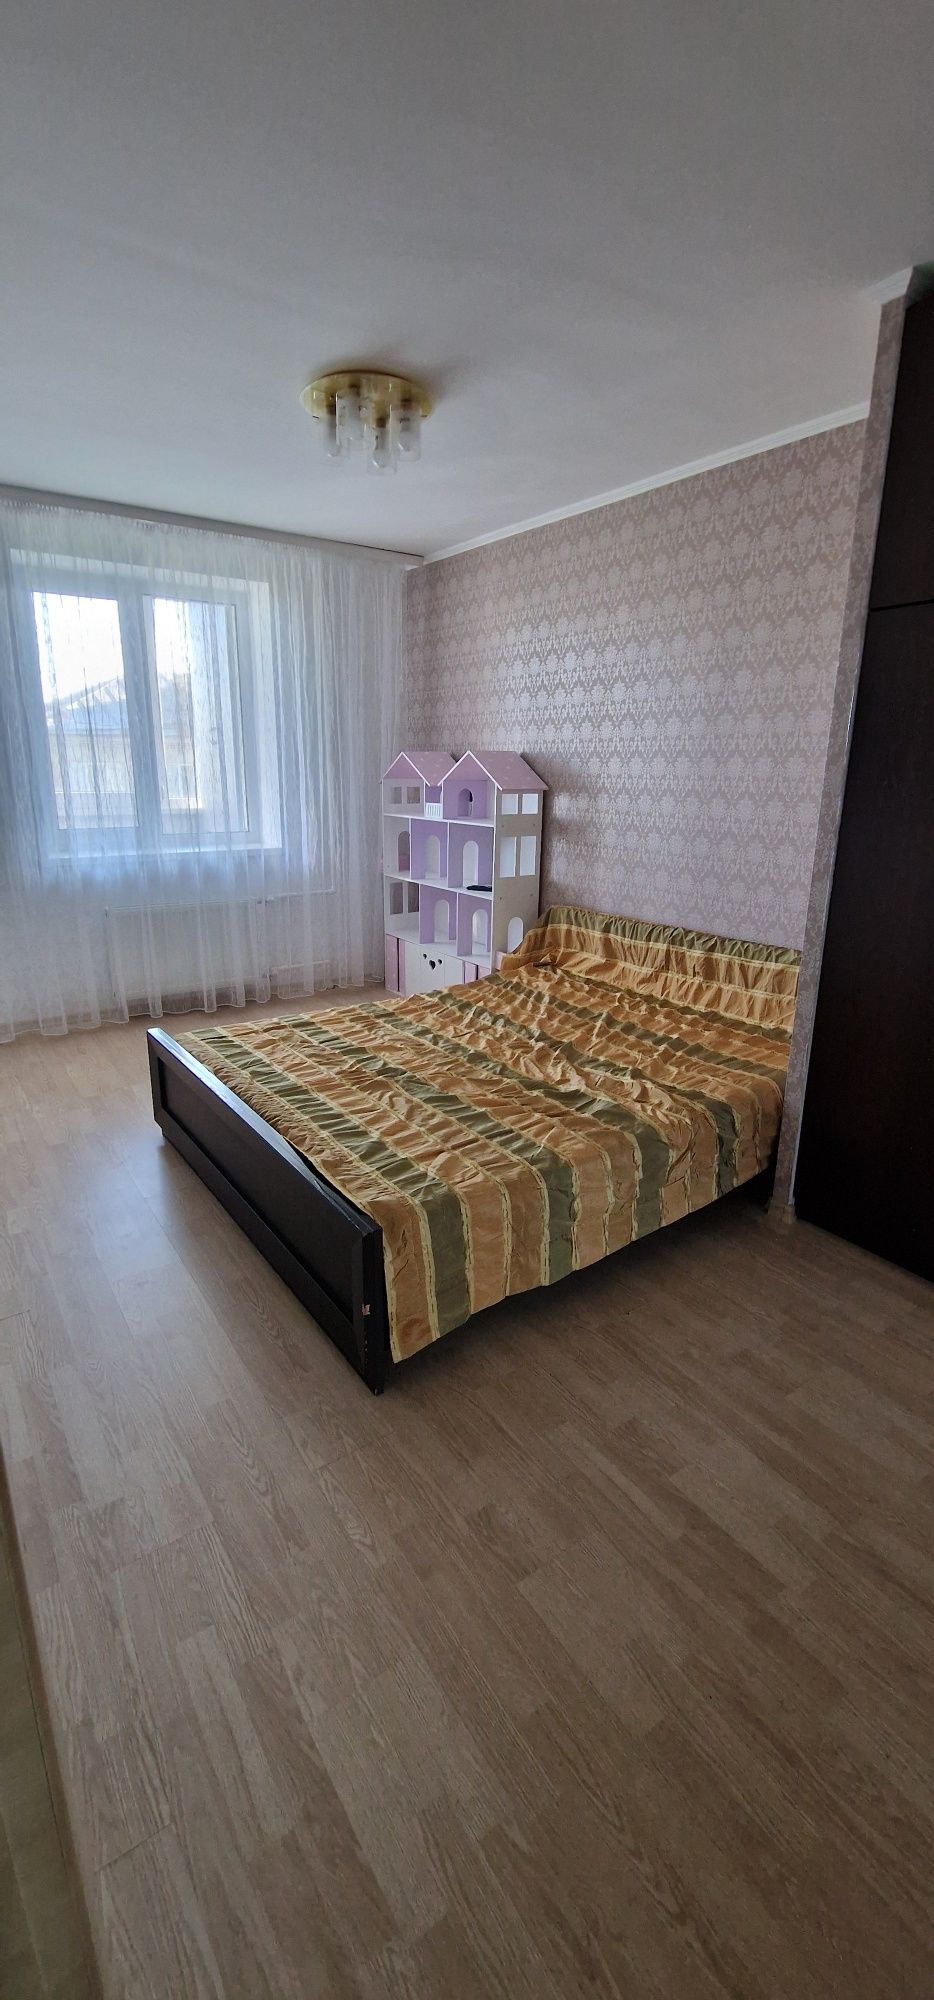 Продаже квартира в центре Харькова